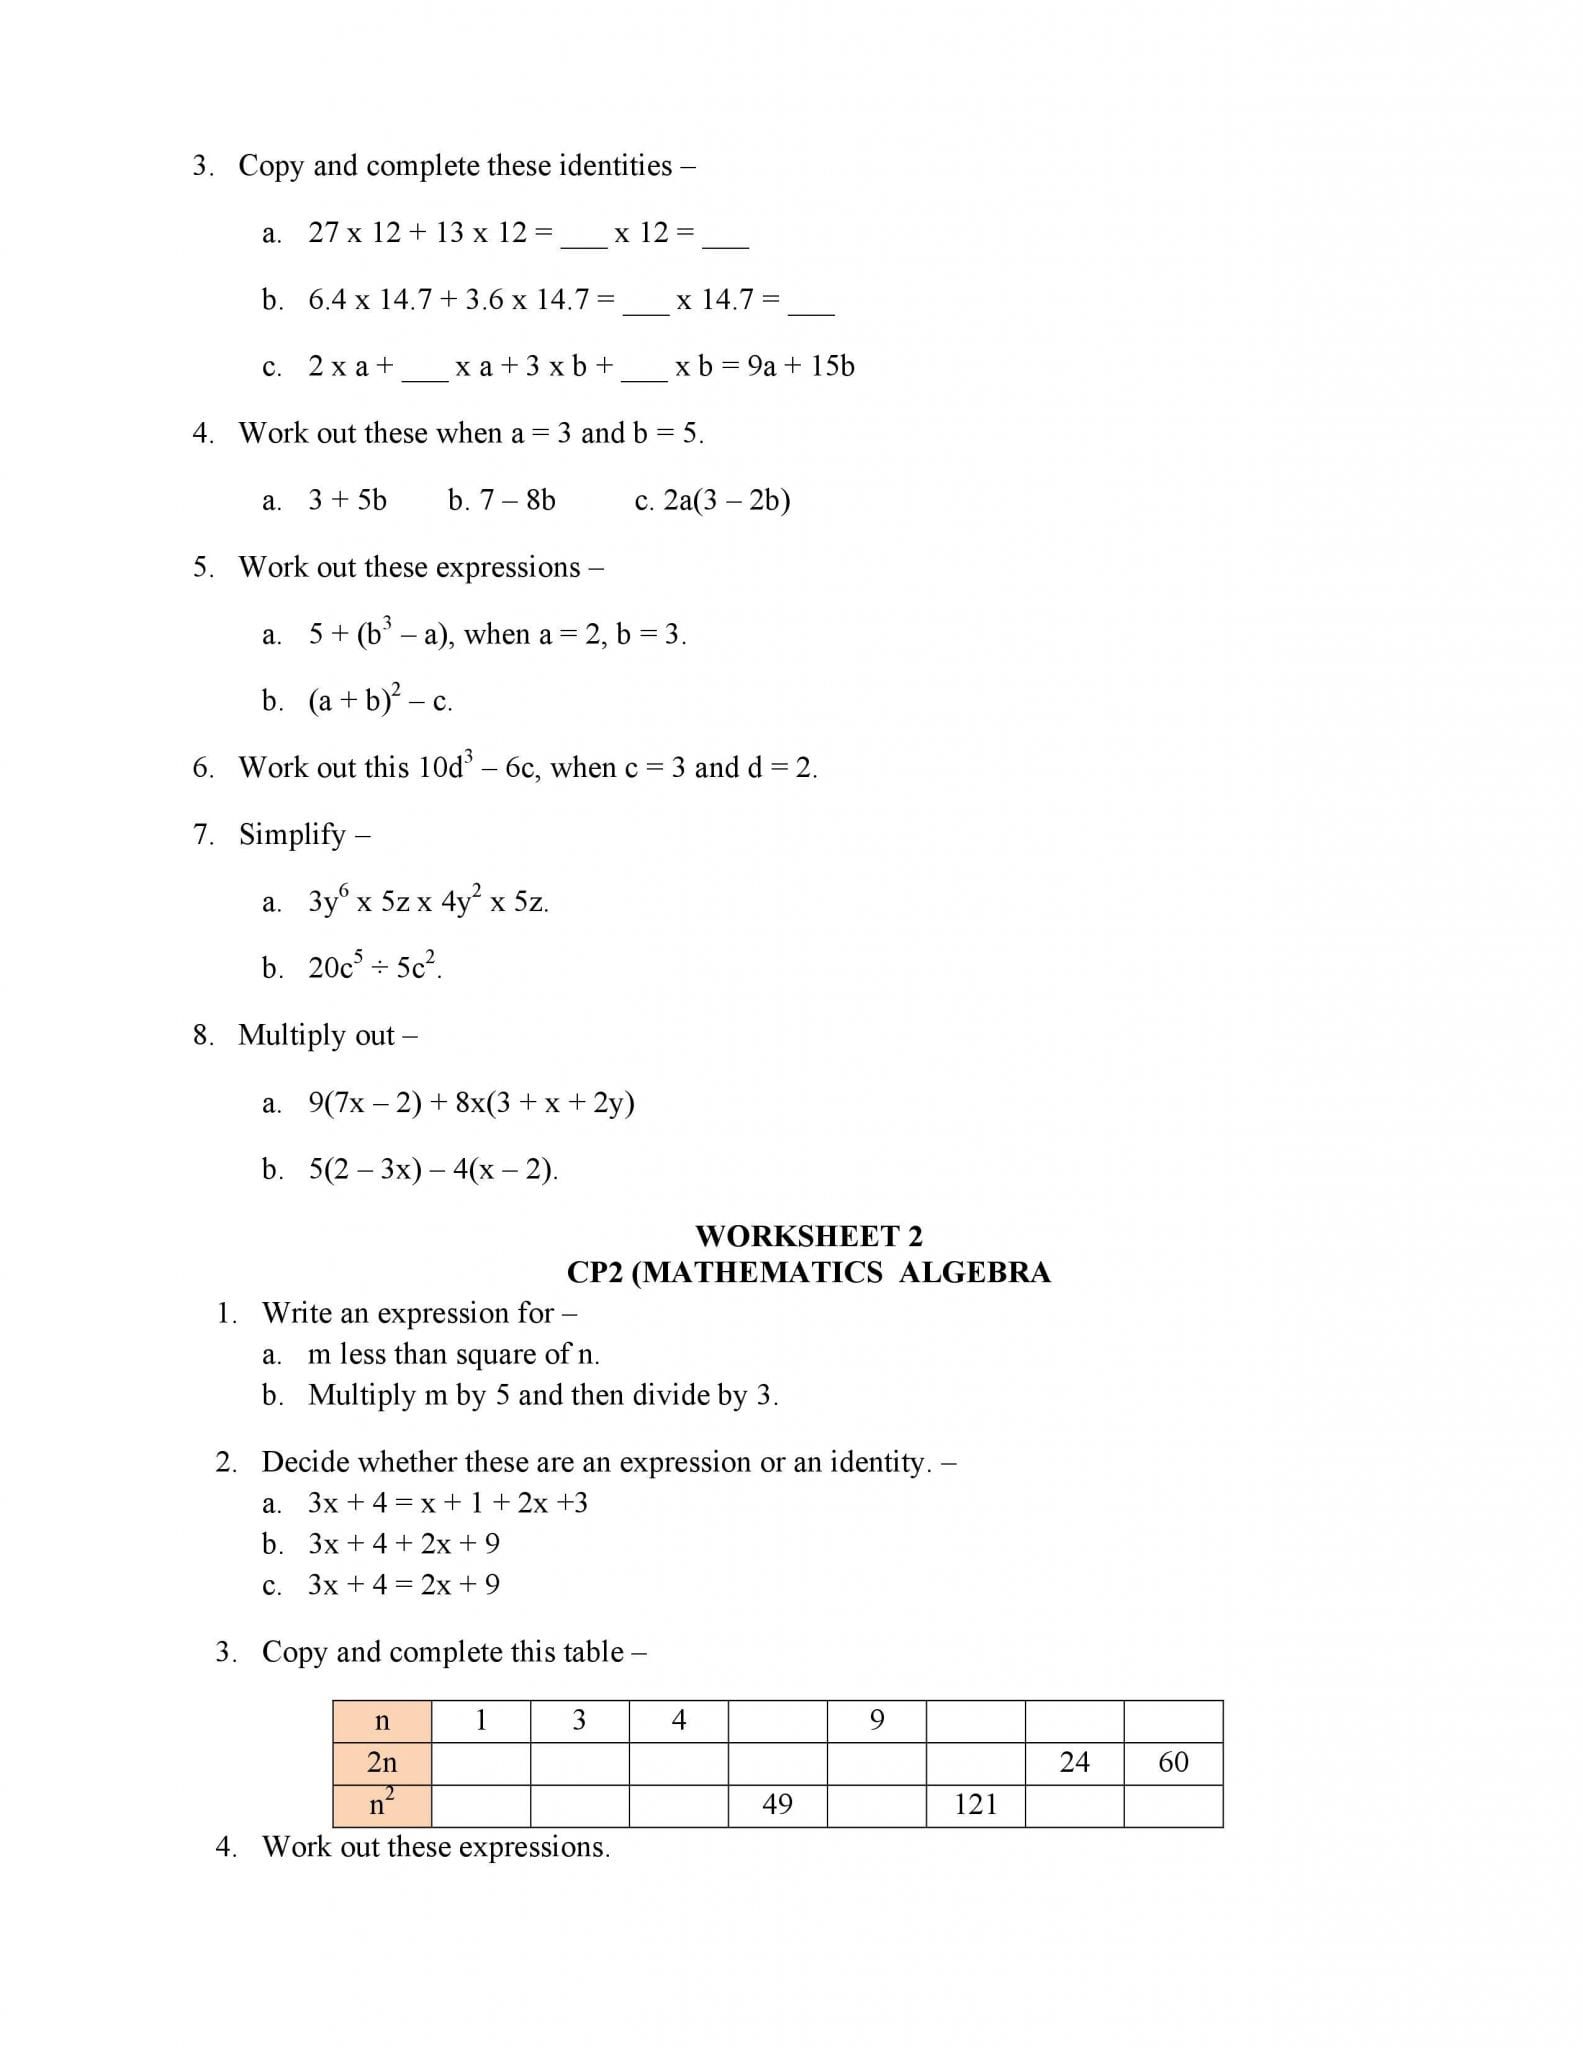 Translating Algebraic Expressions Worksheet